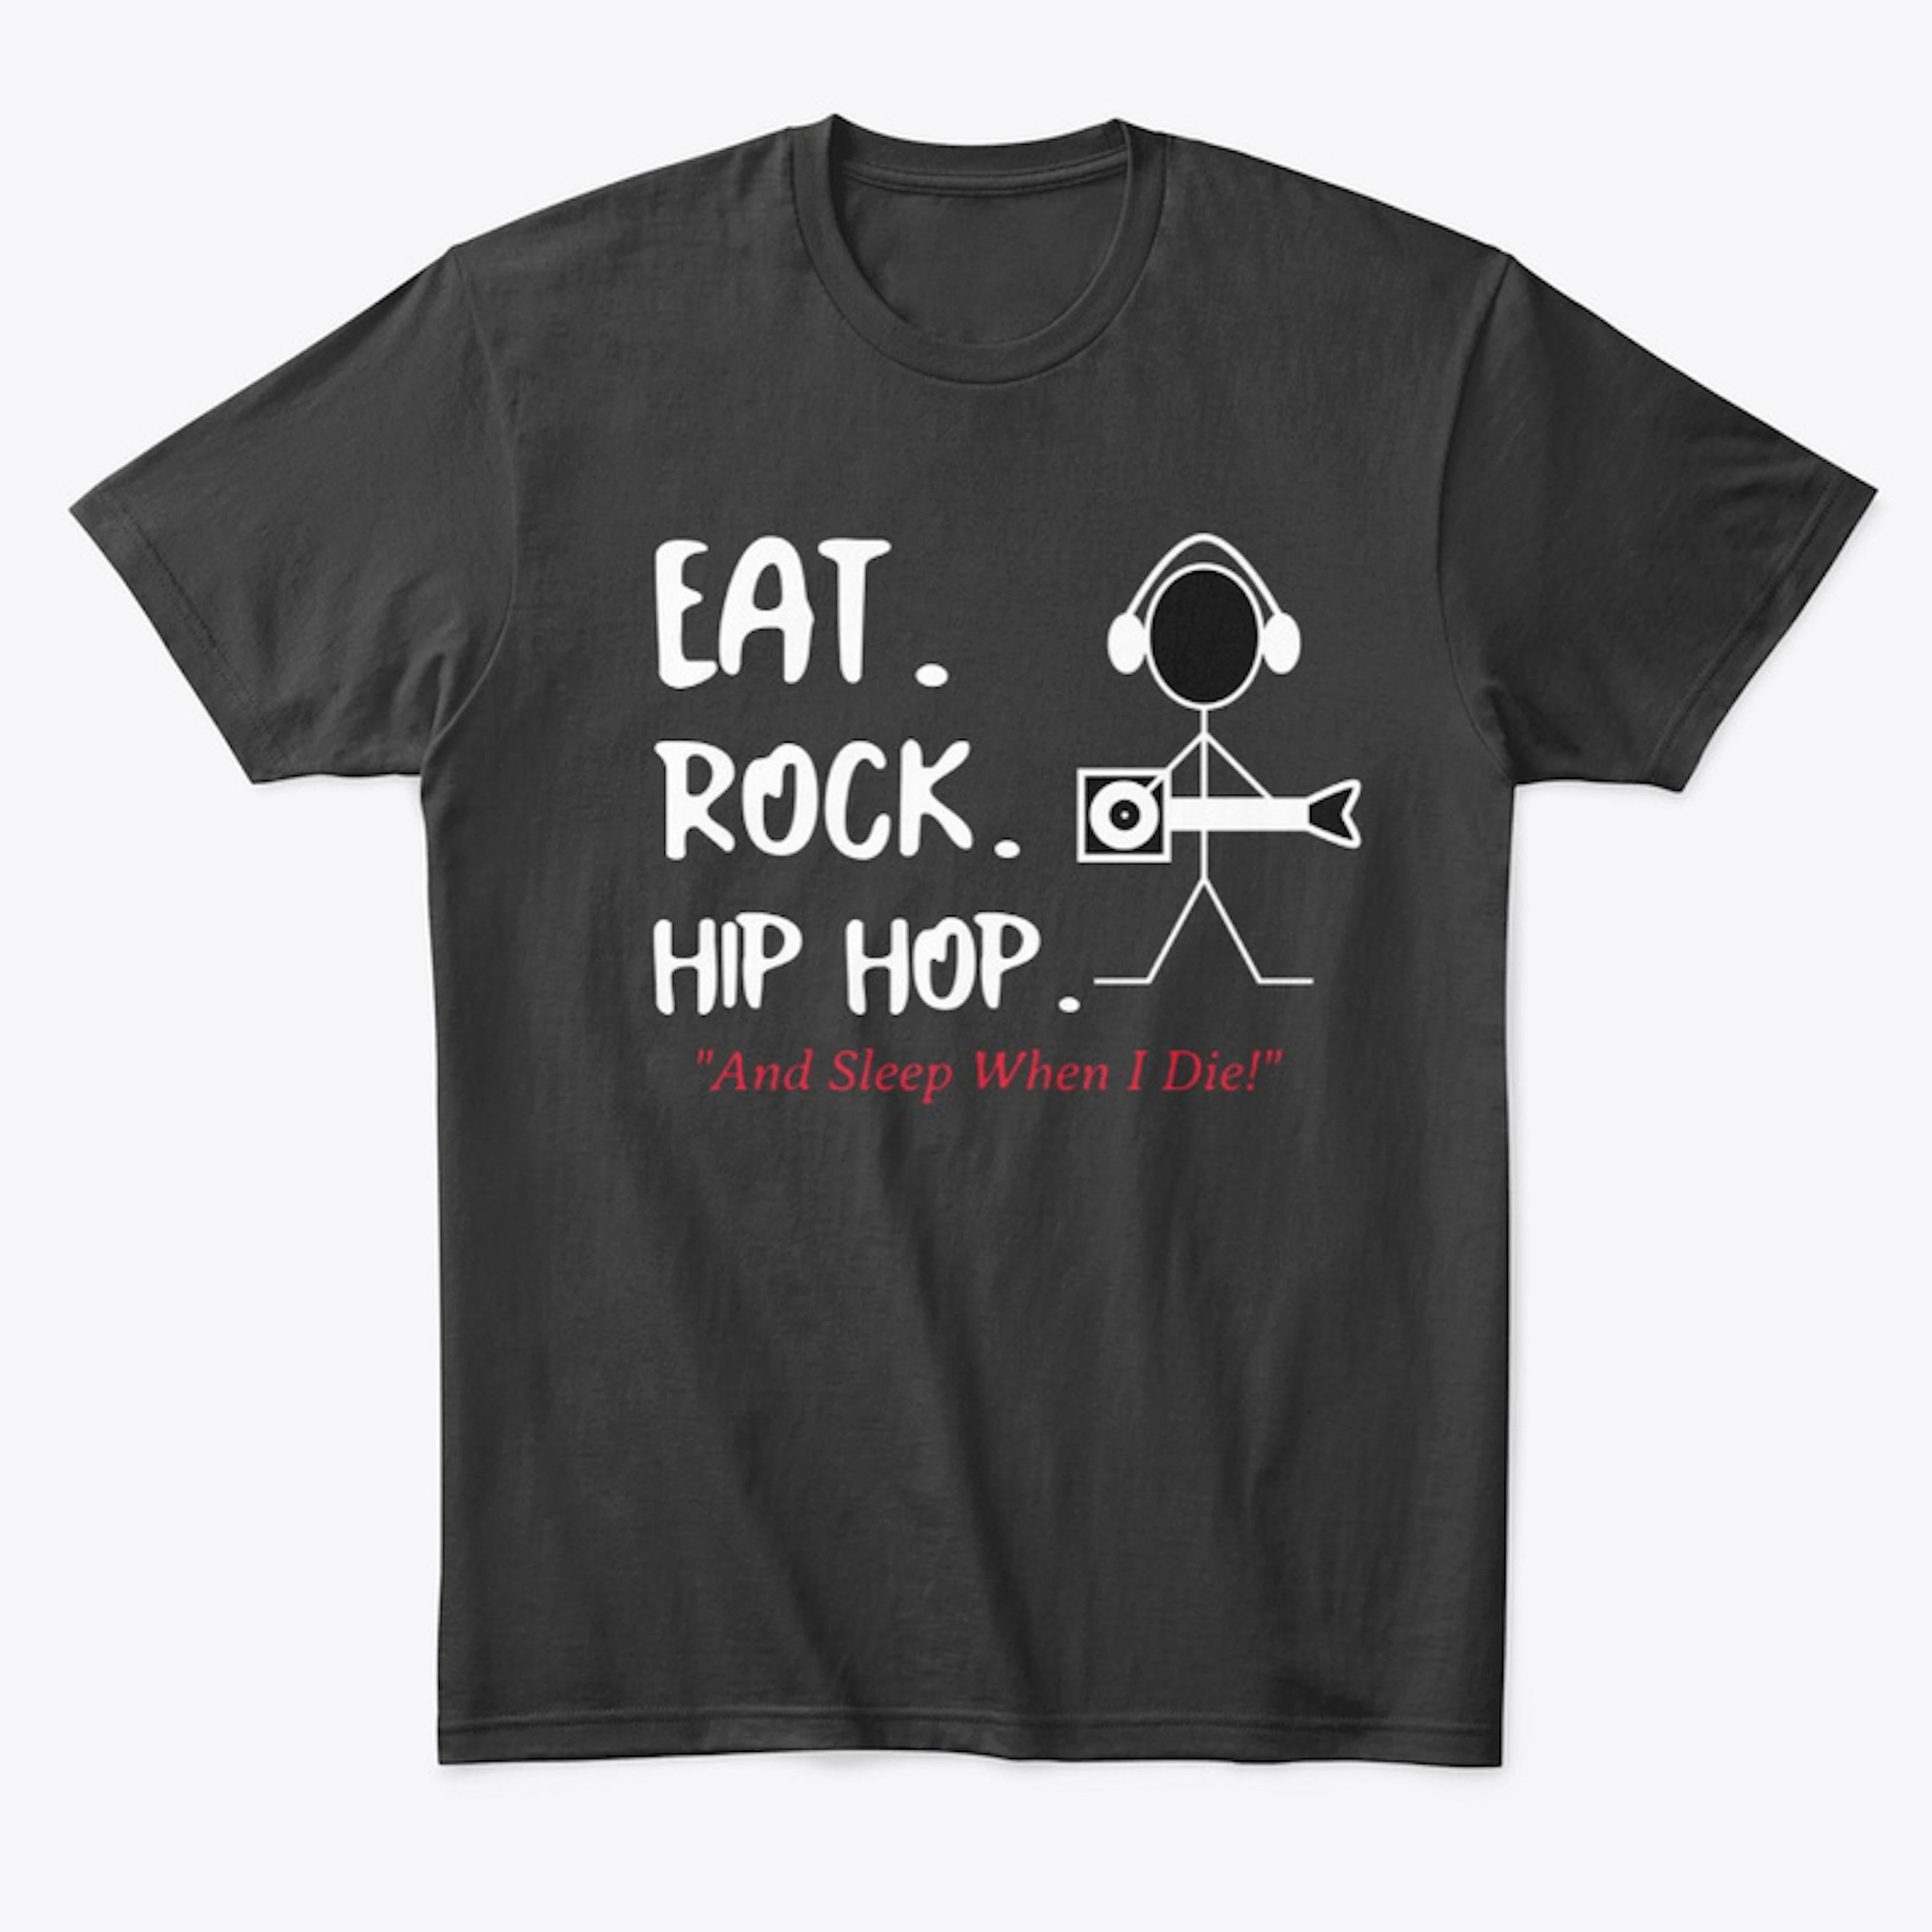 Eat. Rock. Hip Hop. "Sleep When I Die"